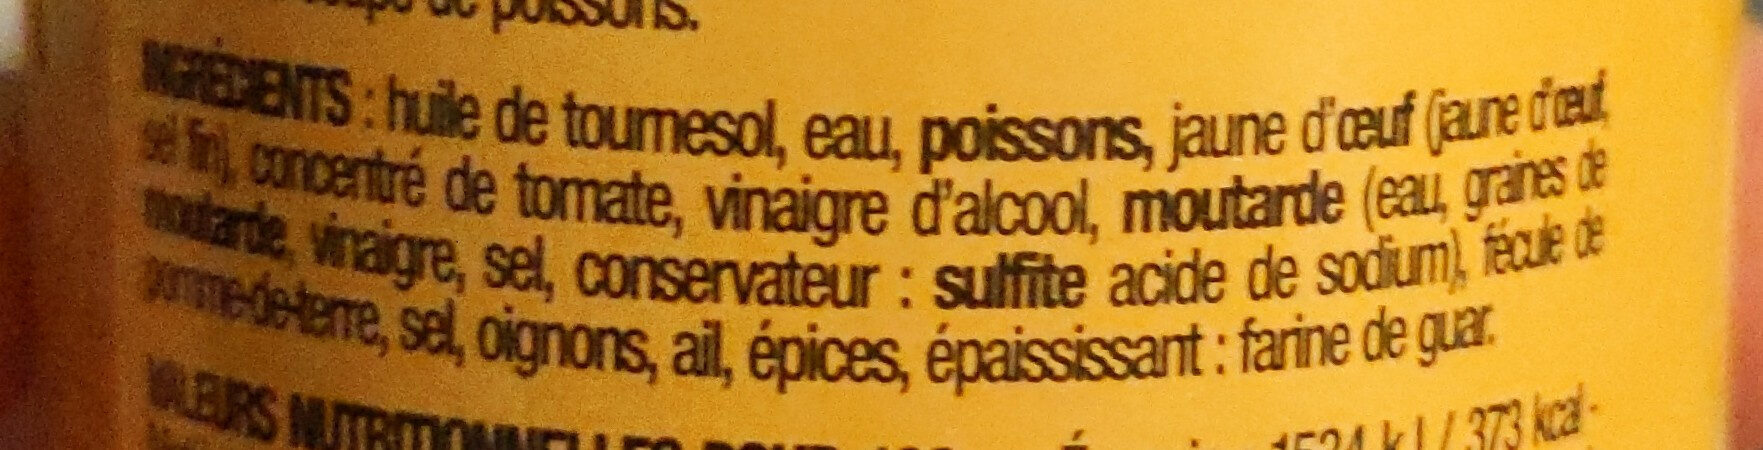 sauce rouille - المكونات - fr